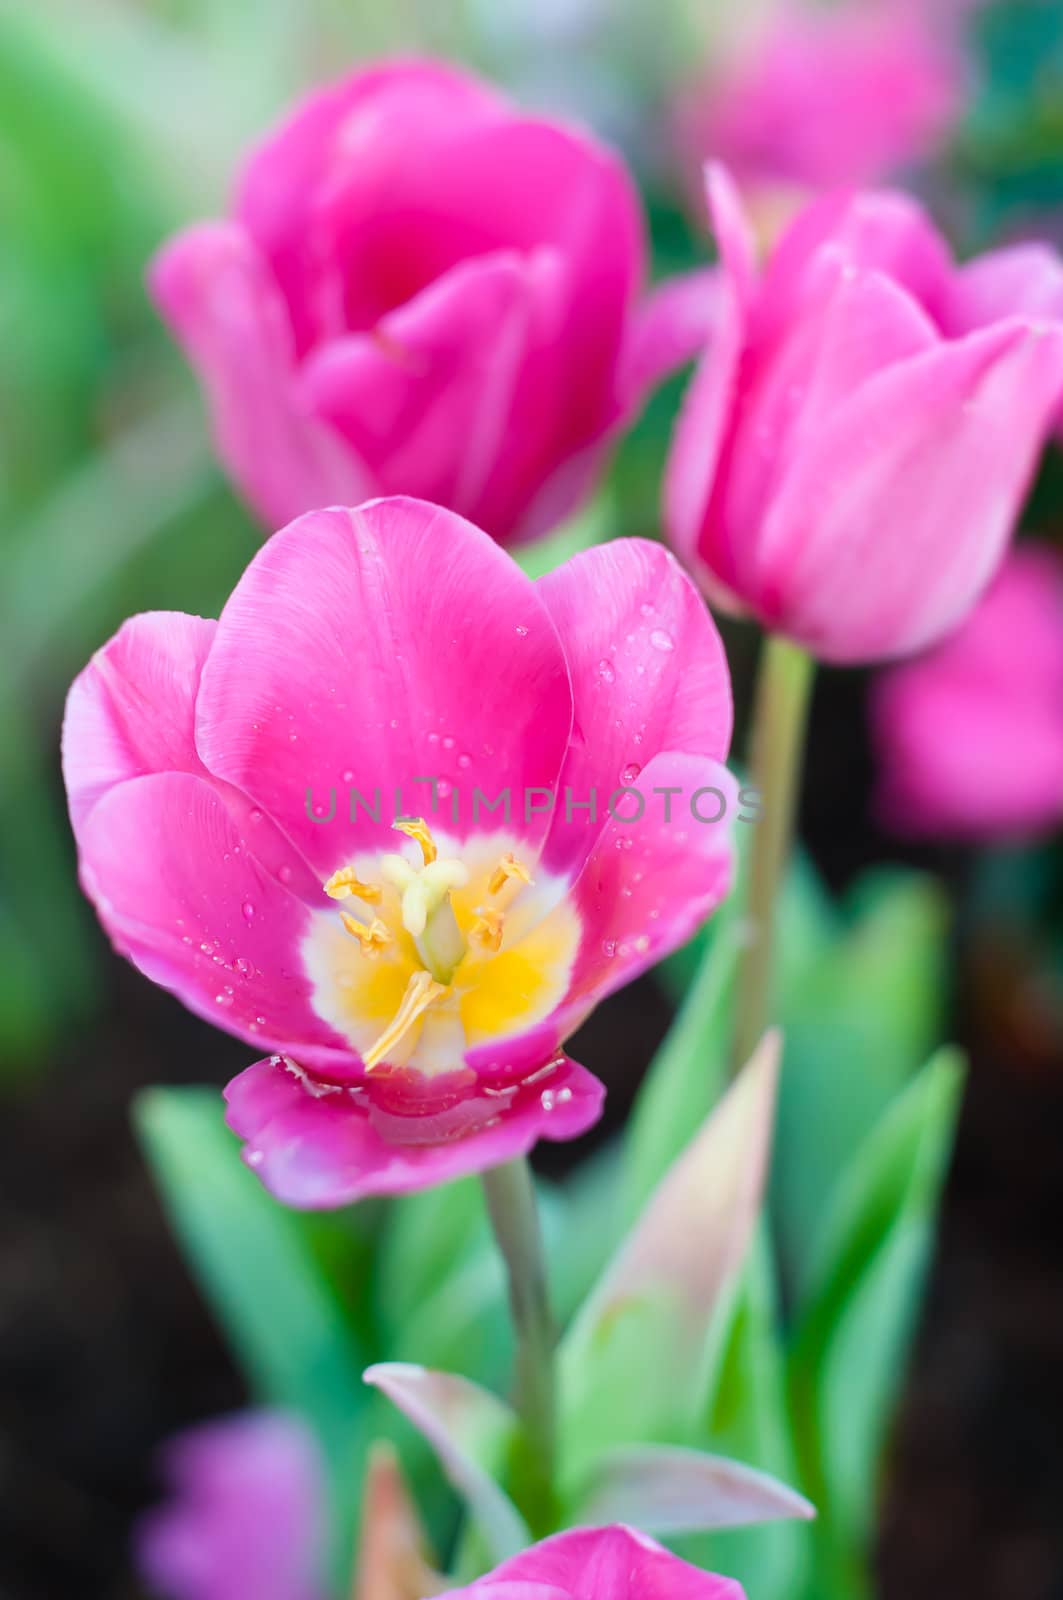 Pink tulip in garden with drop of water by moggara12